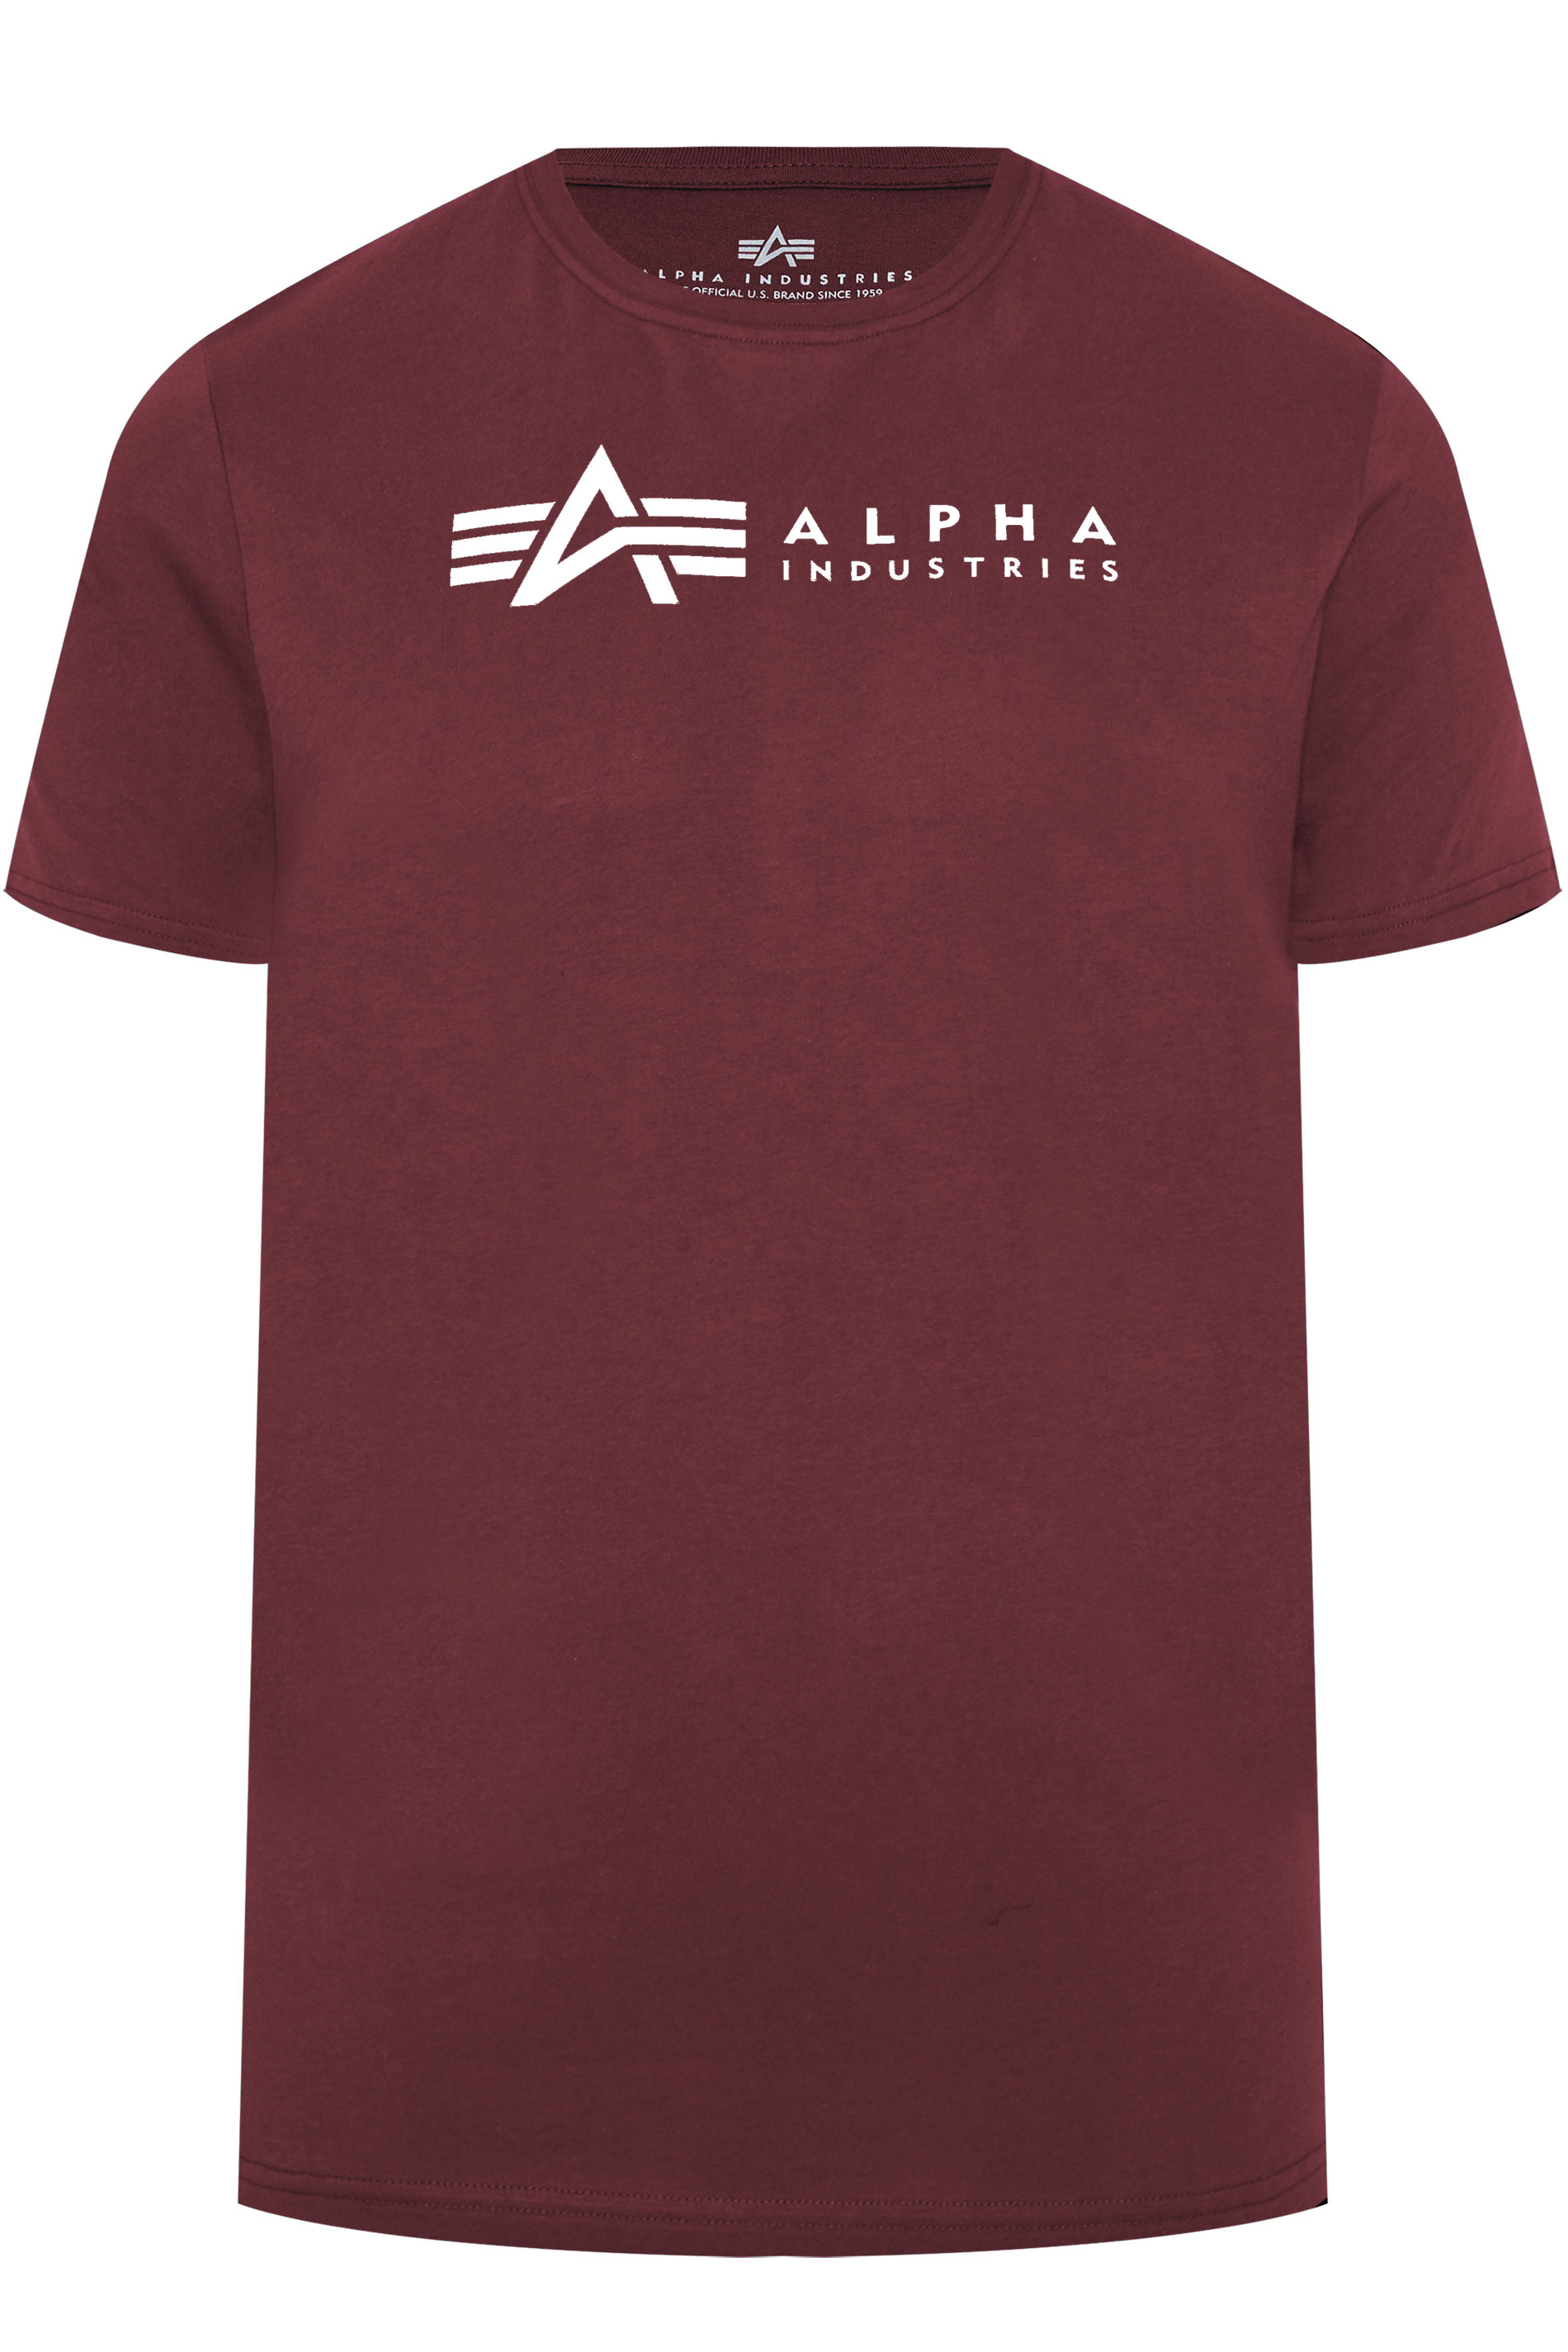 2 INDUSTRIES Burgundy Red BadRhino Pack T-Shirts ALPHA | Logo